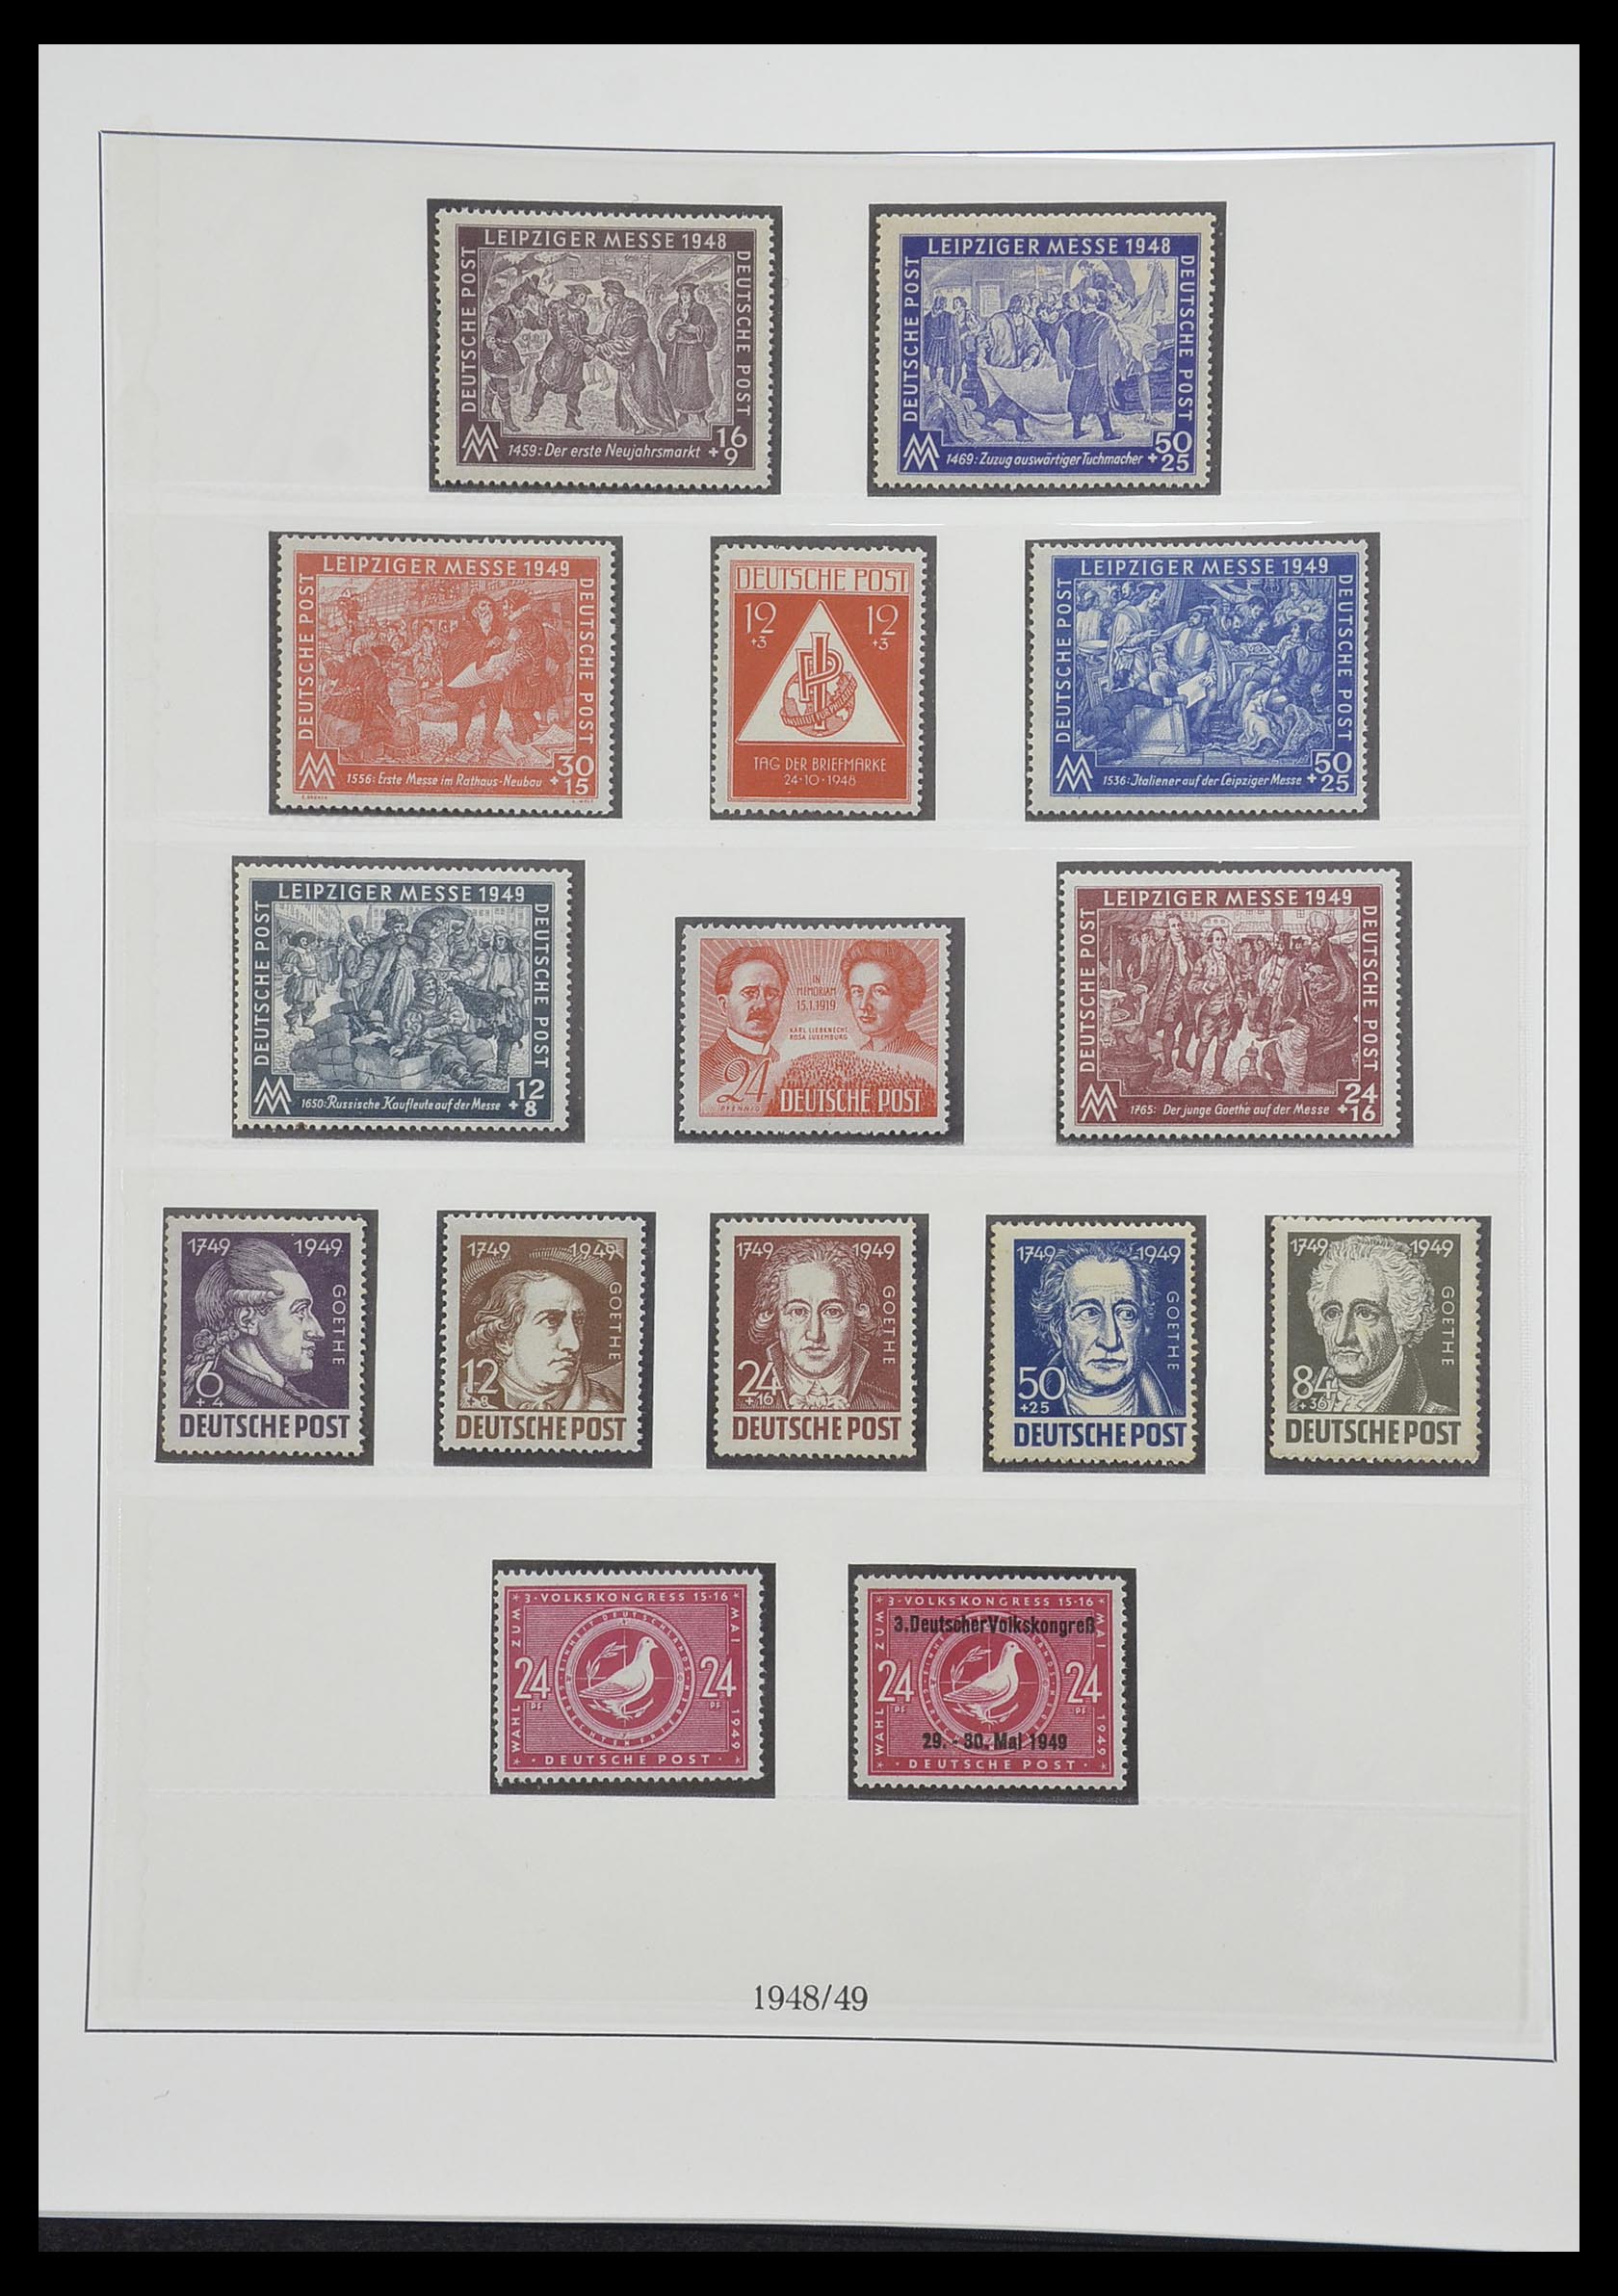 33216 054 - Stamp collection 33216 German Zones 1945-1949.